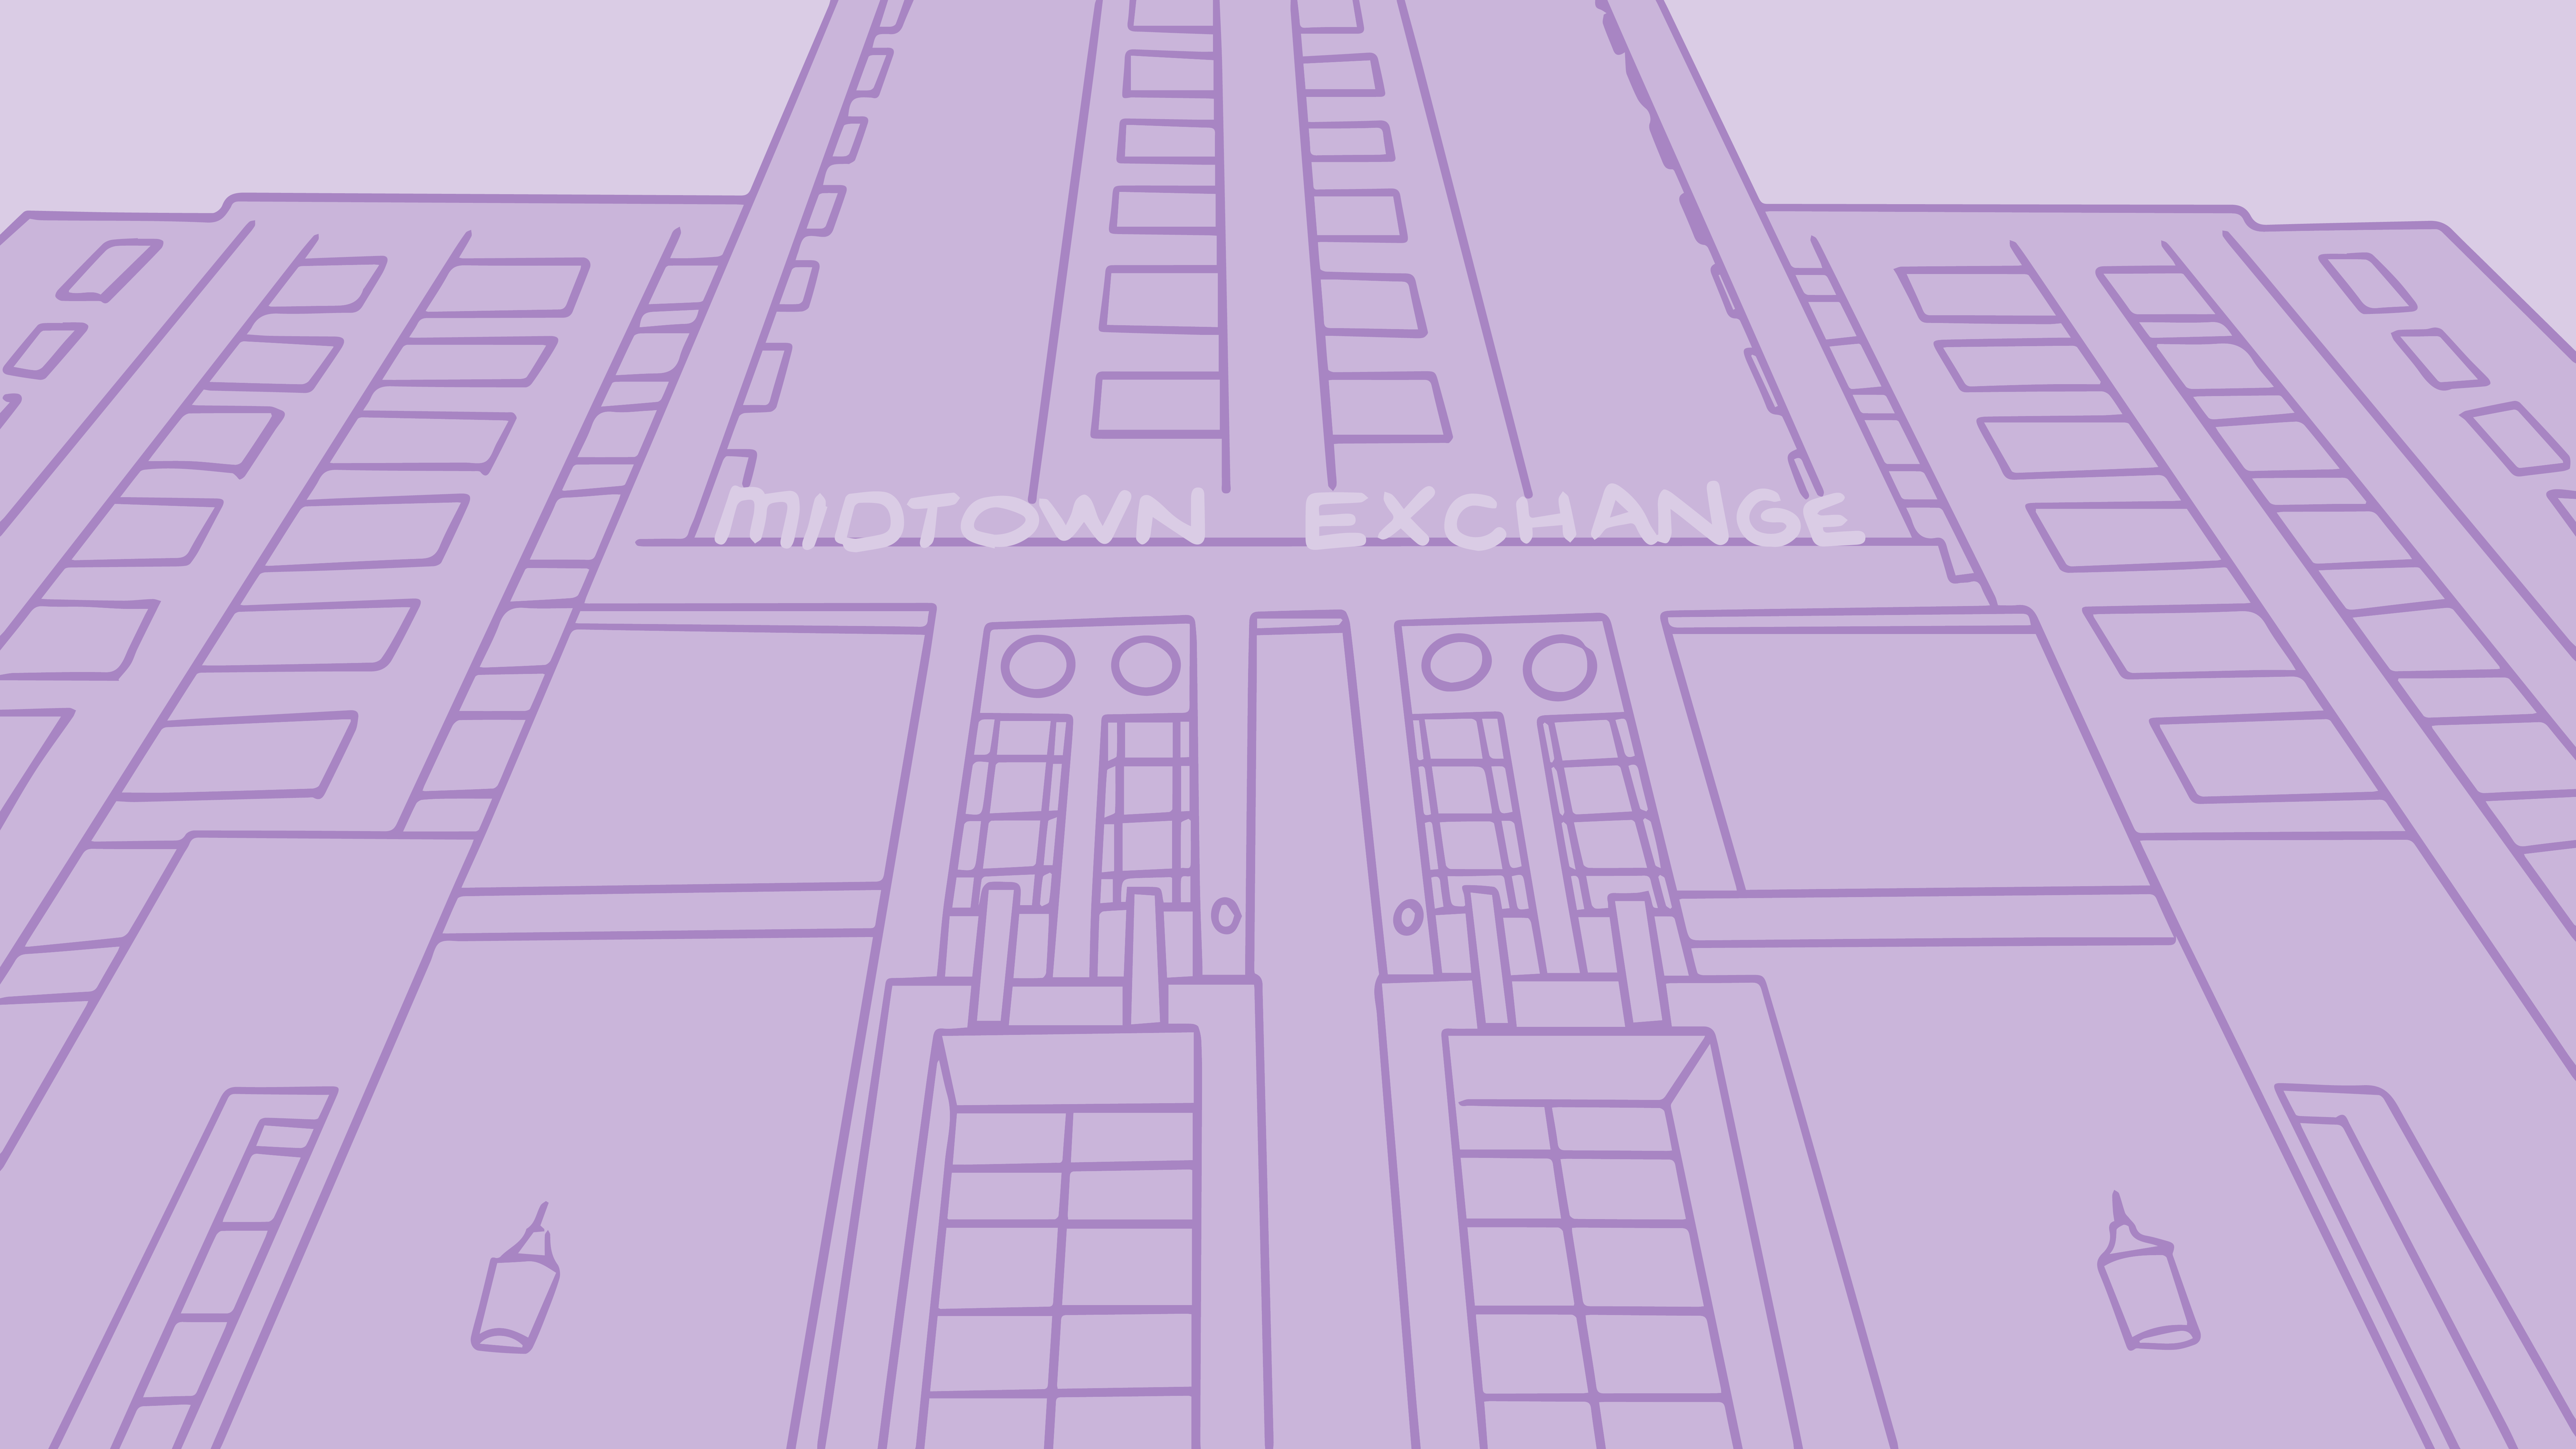 Illustration of midtown exchange in monochromatic purple